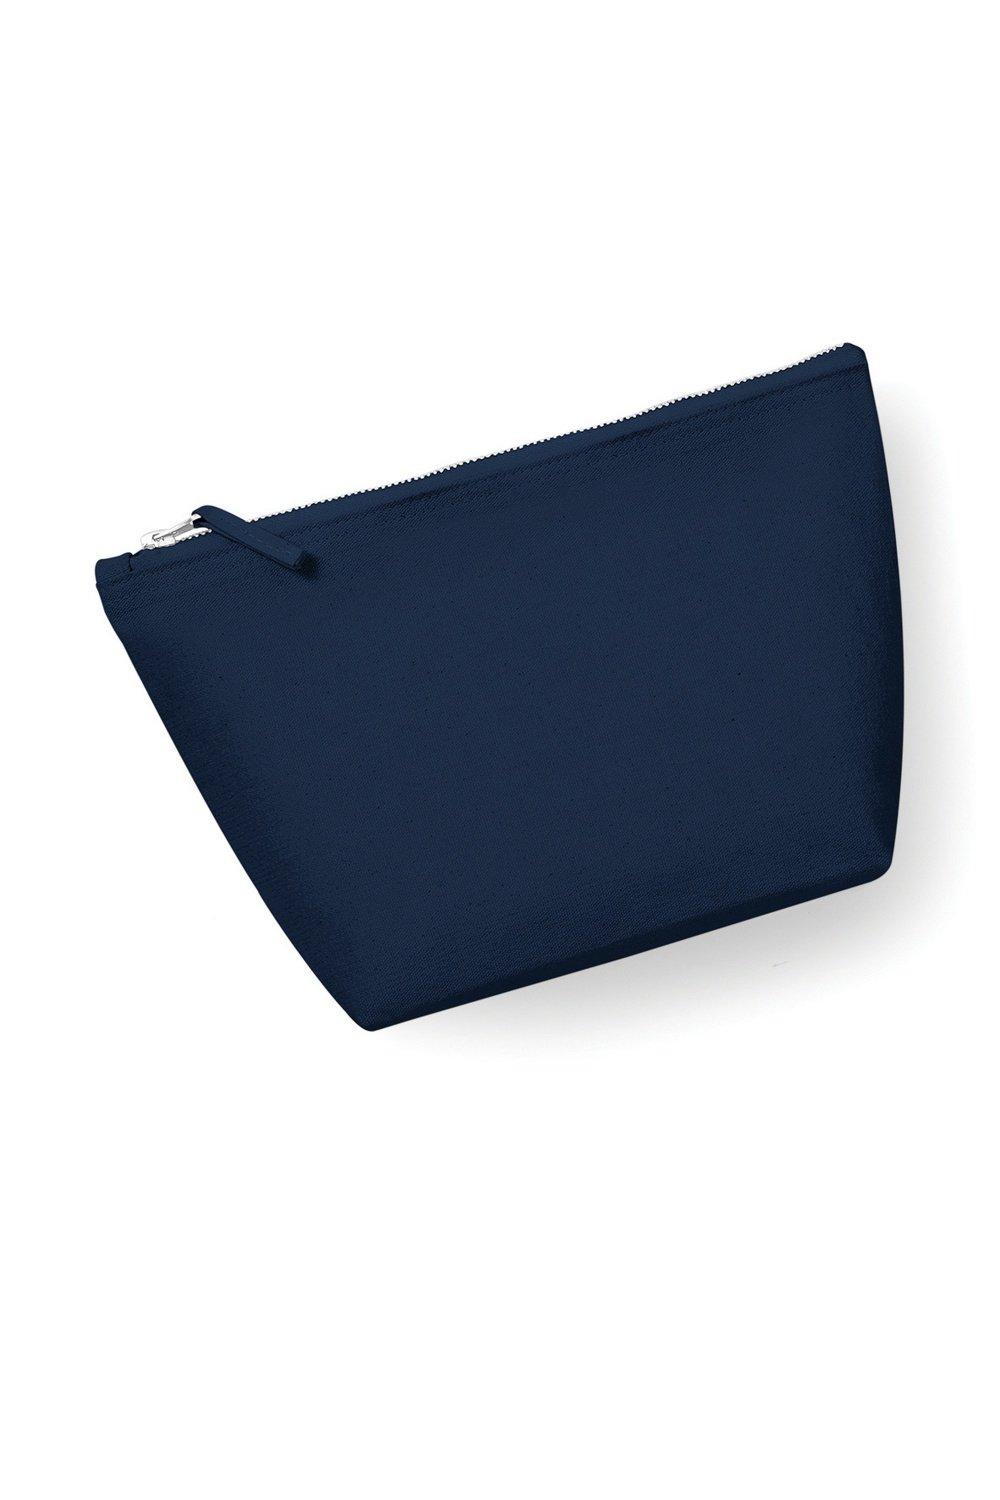 Холщовая сумка для аксессуаров Westford Mill, темно-синий